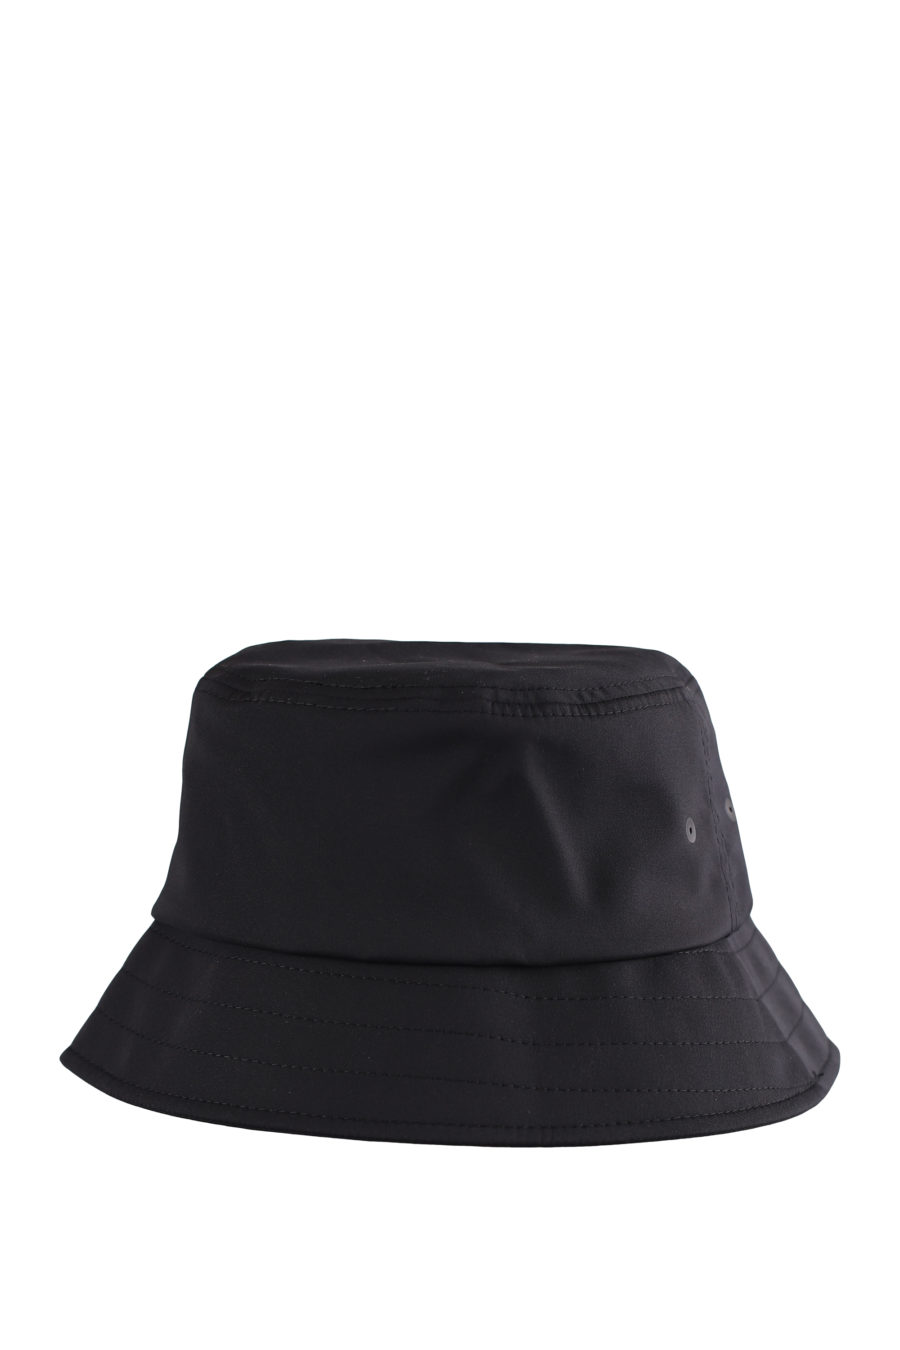 Sombrero de pescador negro con logotipo en placa plateada - IMG 9608